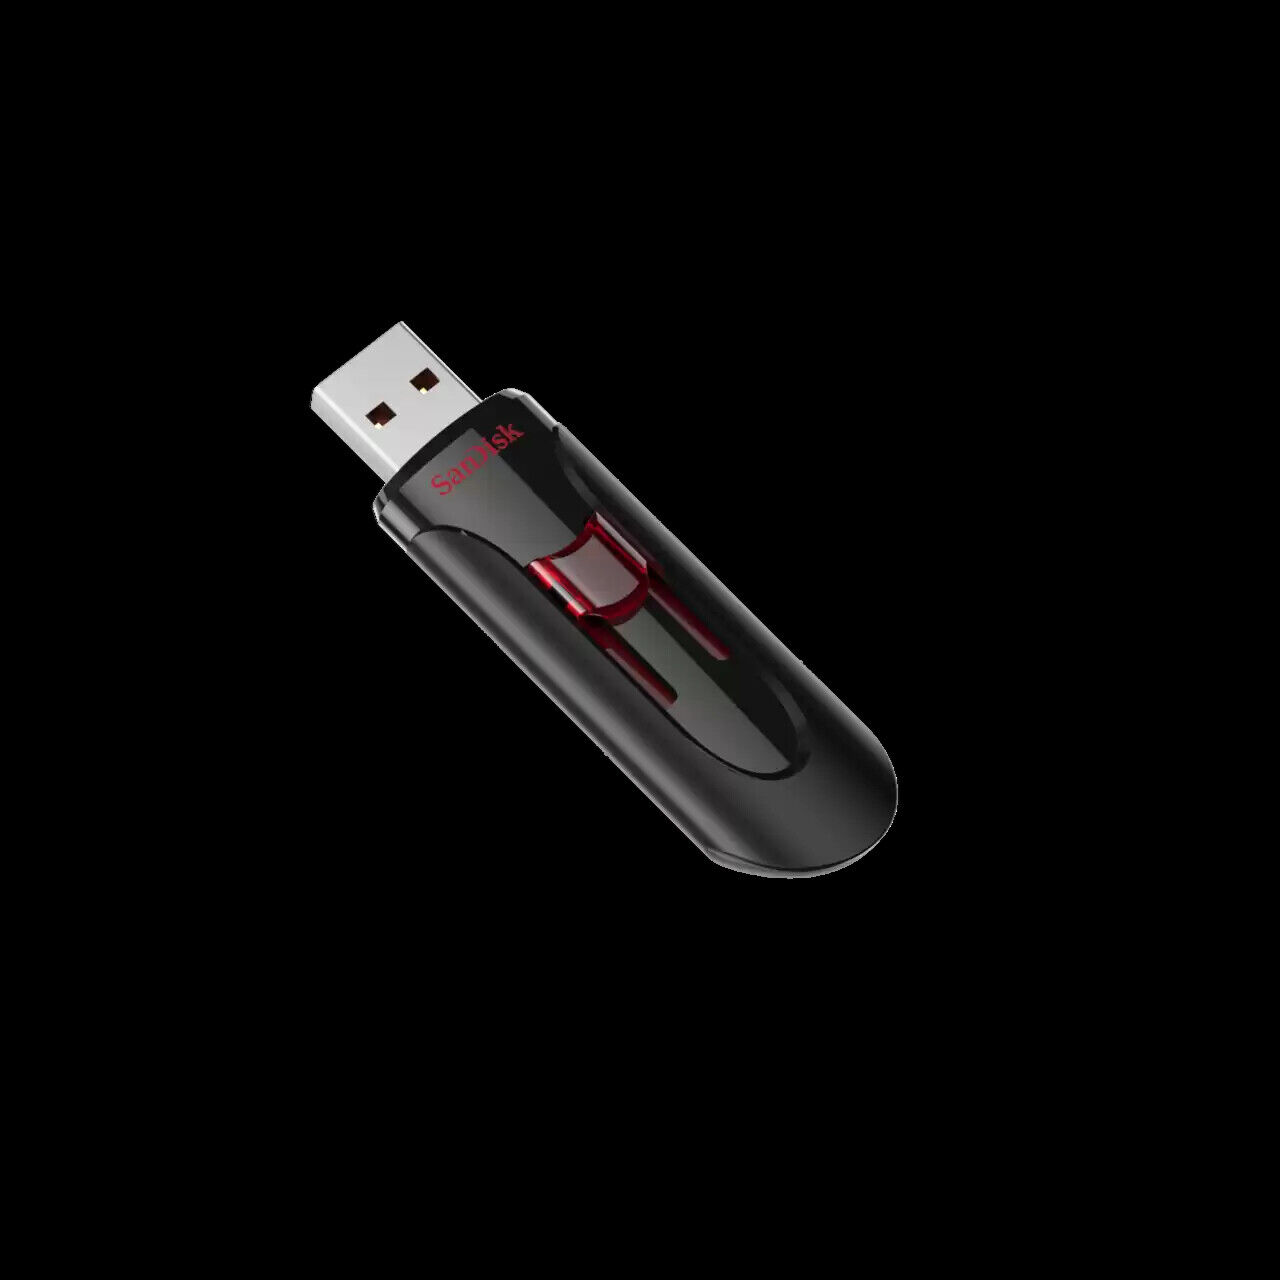 SanDisk 128GB Cruzer Glide USB 3.0 Flash Drive, Black - SDCZ600-128G-G35